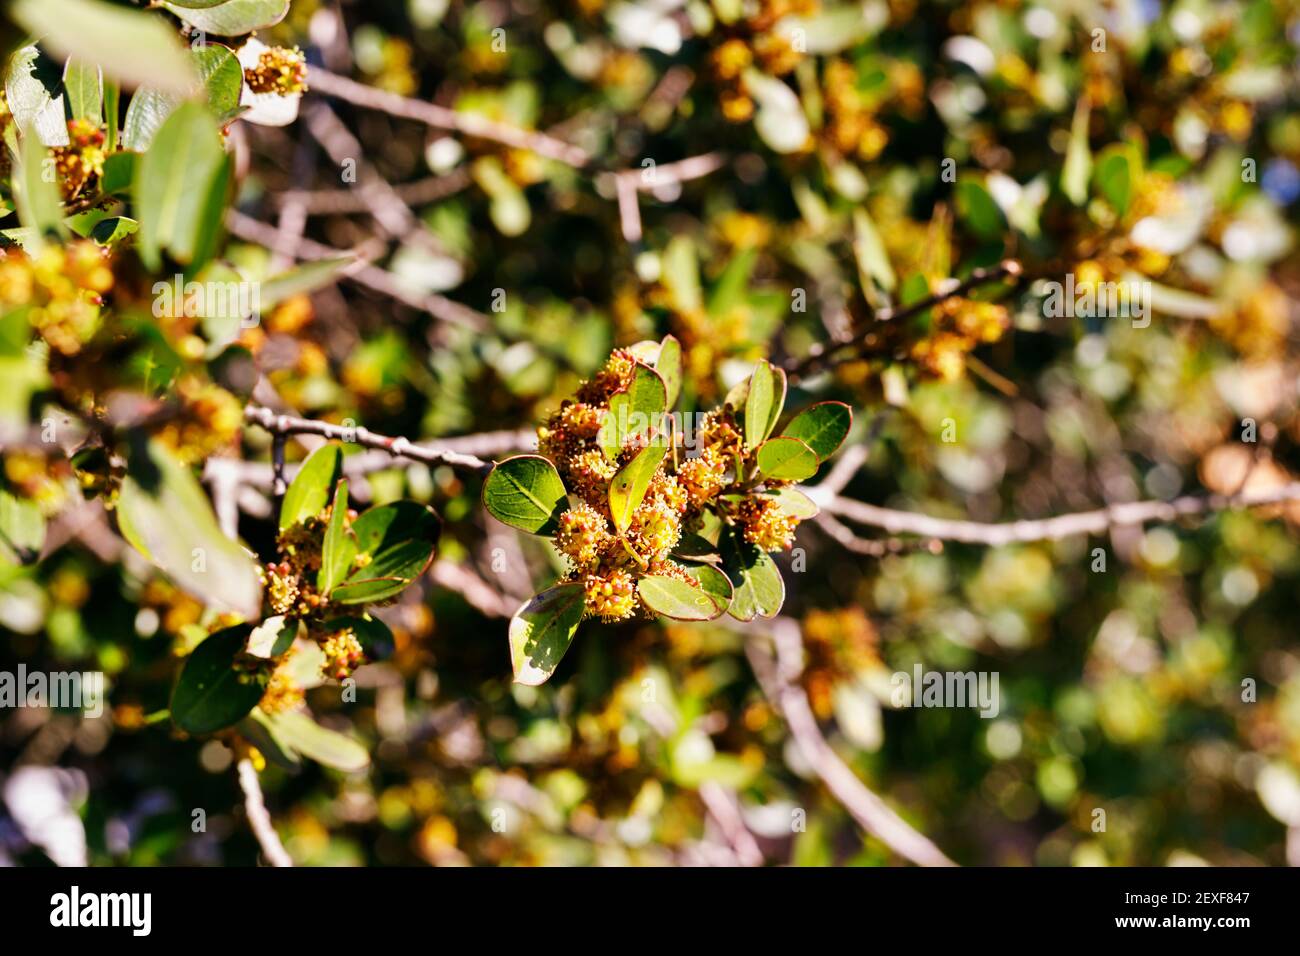 Small  fragrant yellow  flowers of Mediterranean buckthorn tree -rhamnus alaternus- Stock Photo